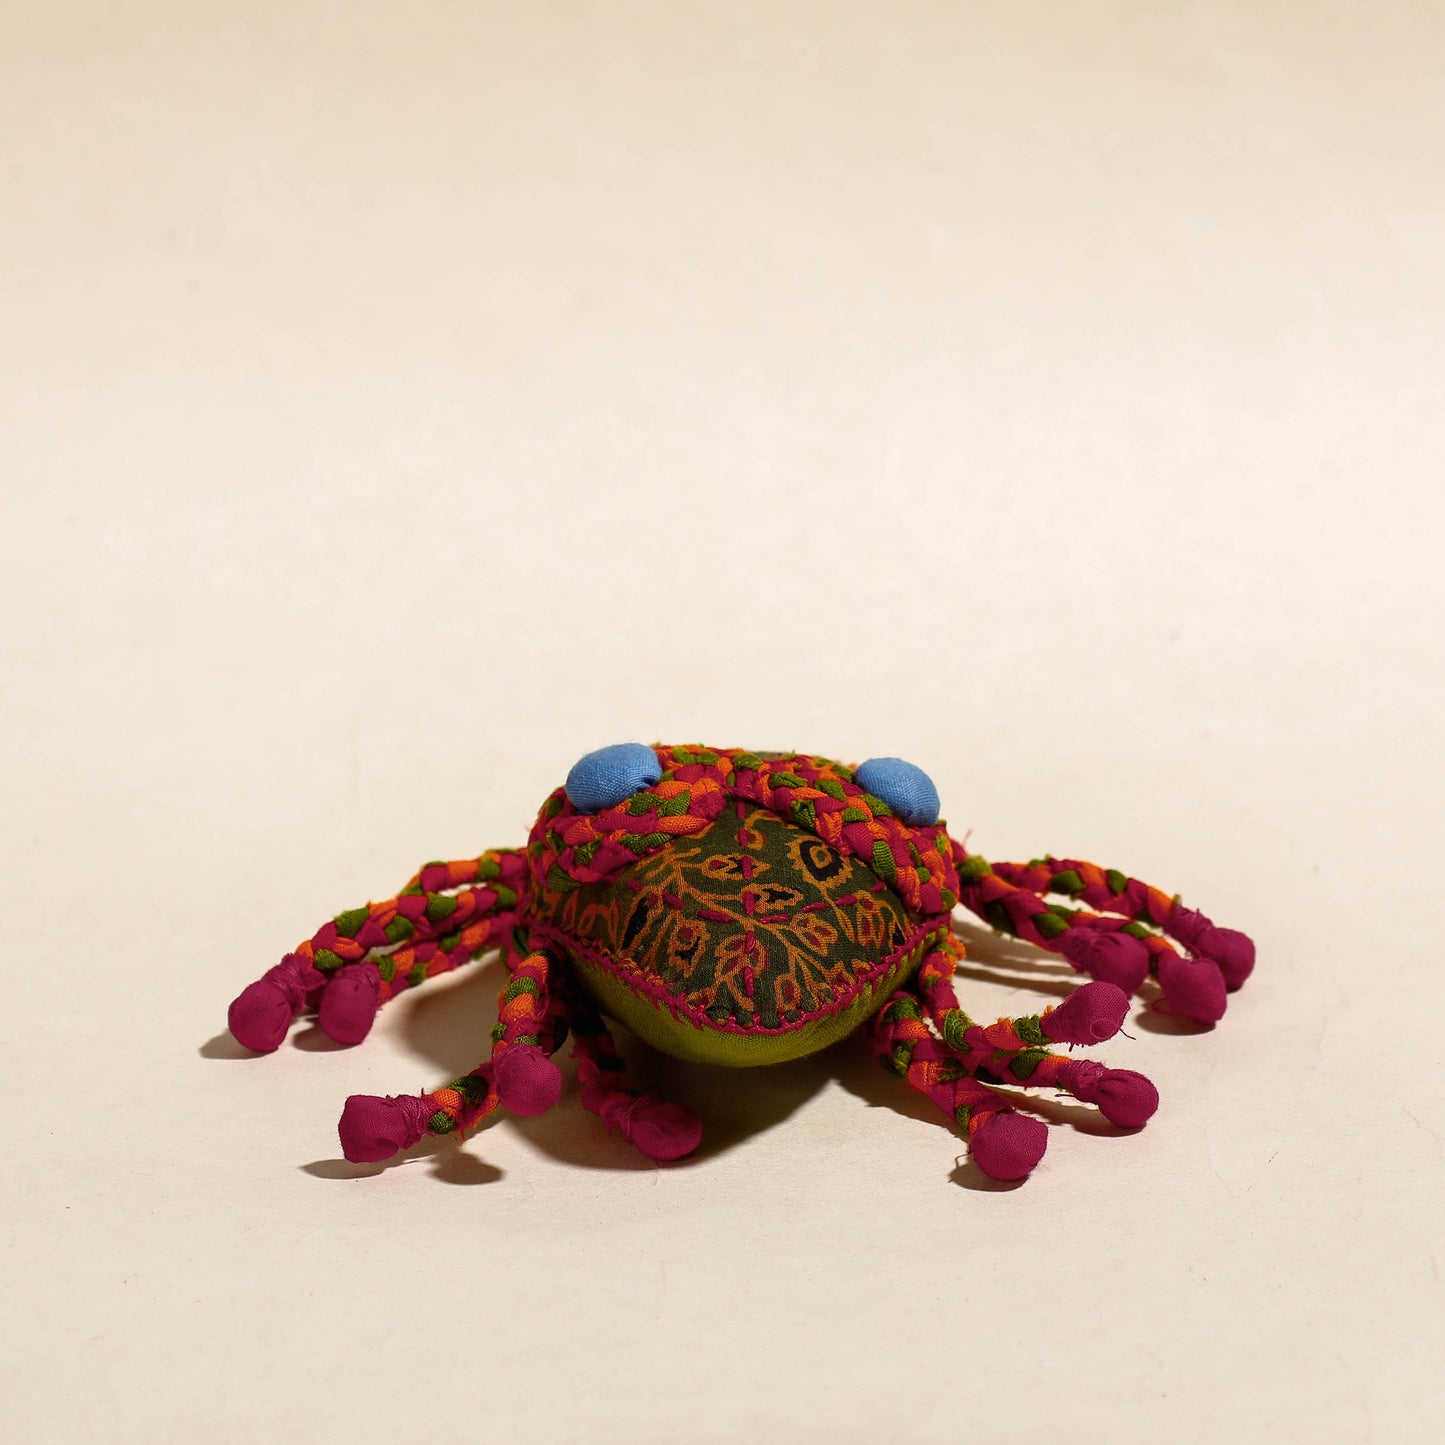 Frog - Handmade Stuffed Toy by Dastkar Ranthambhore